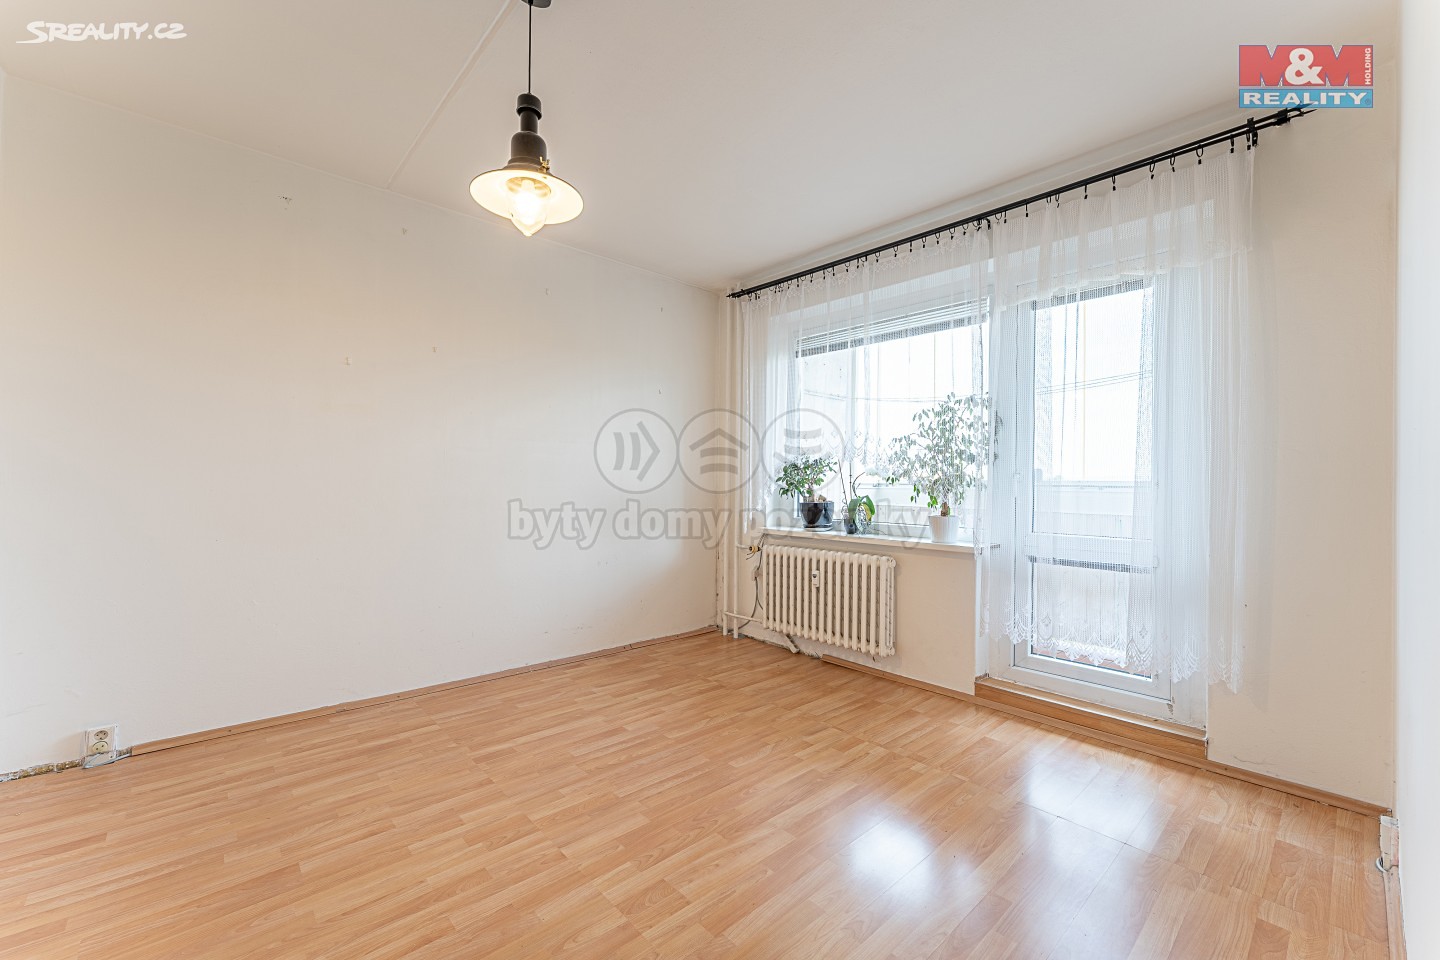 Prodej bytu 3+1 75 m², Zbudovská, Praha 4 - Libuš